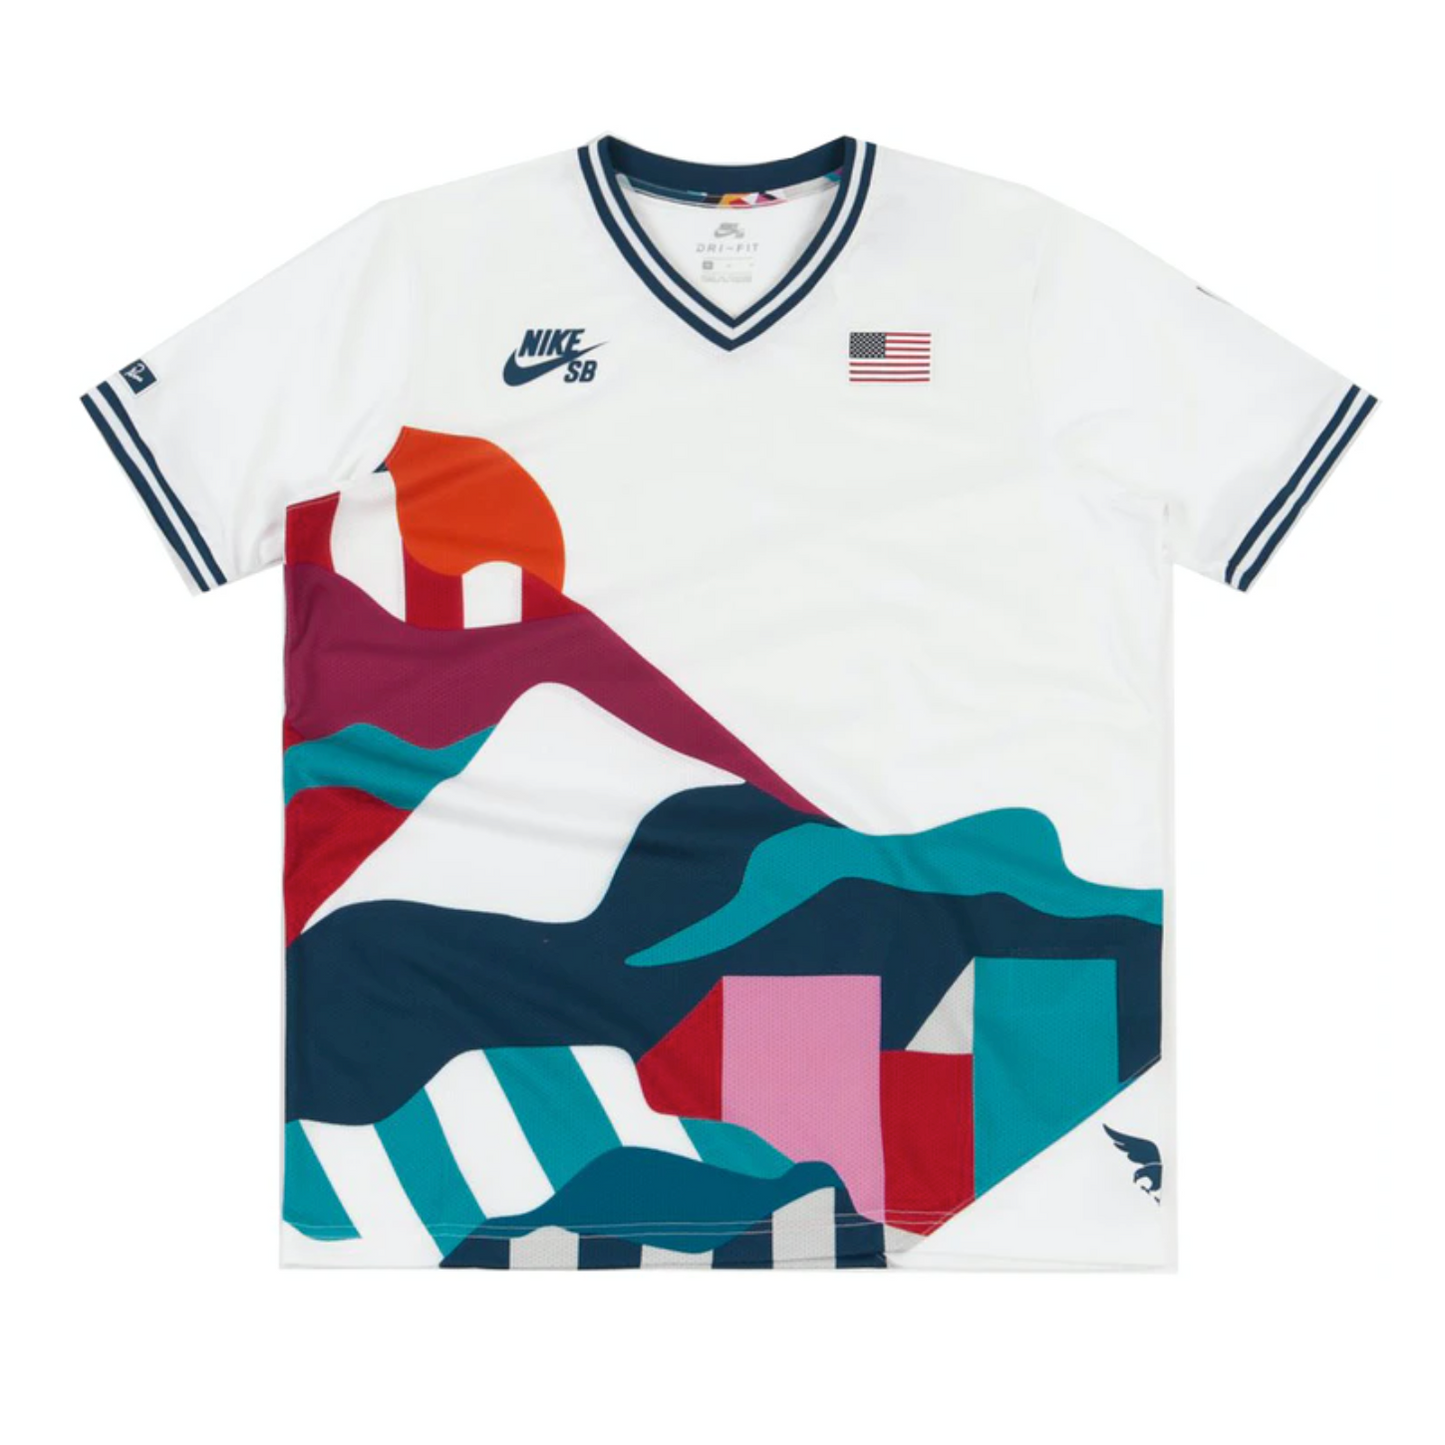 Nike x Parra - Team USA SB Logo Jersey